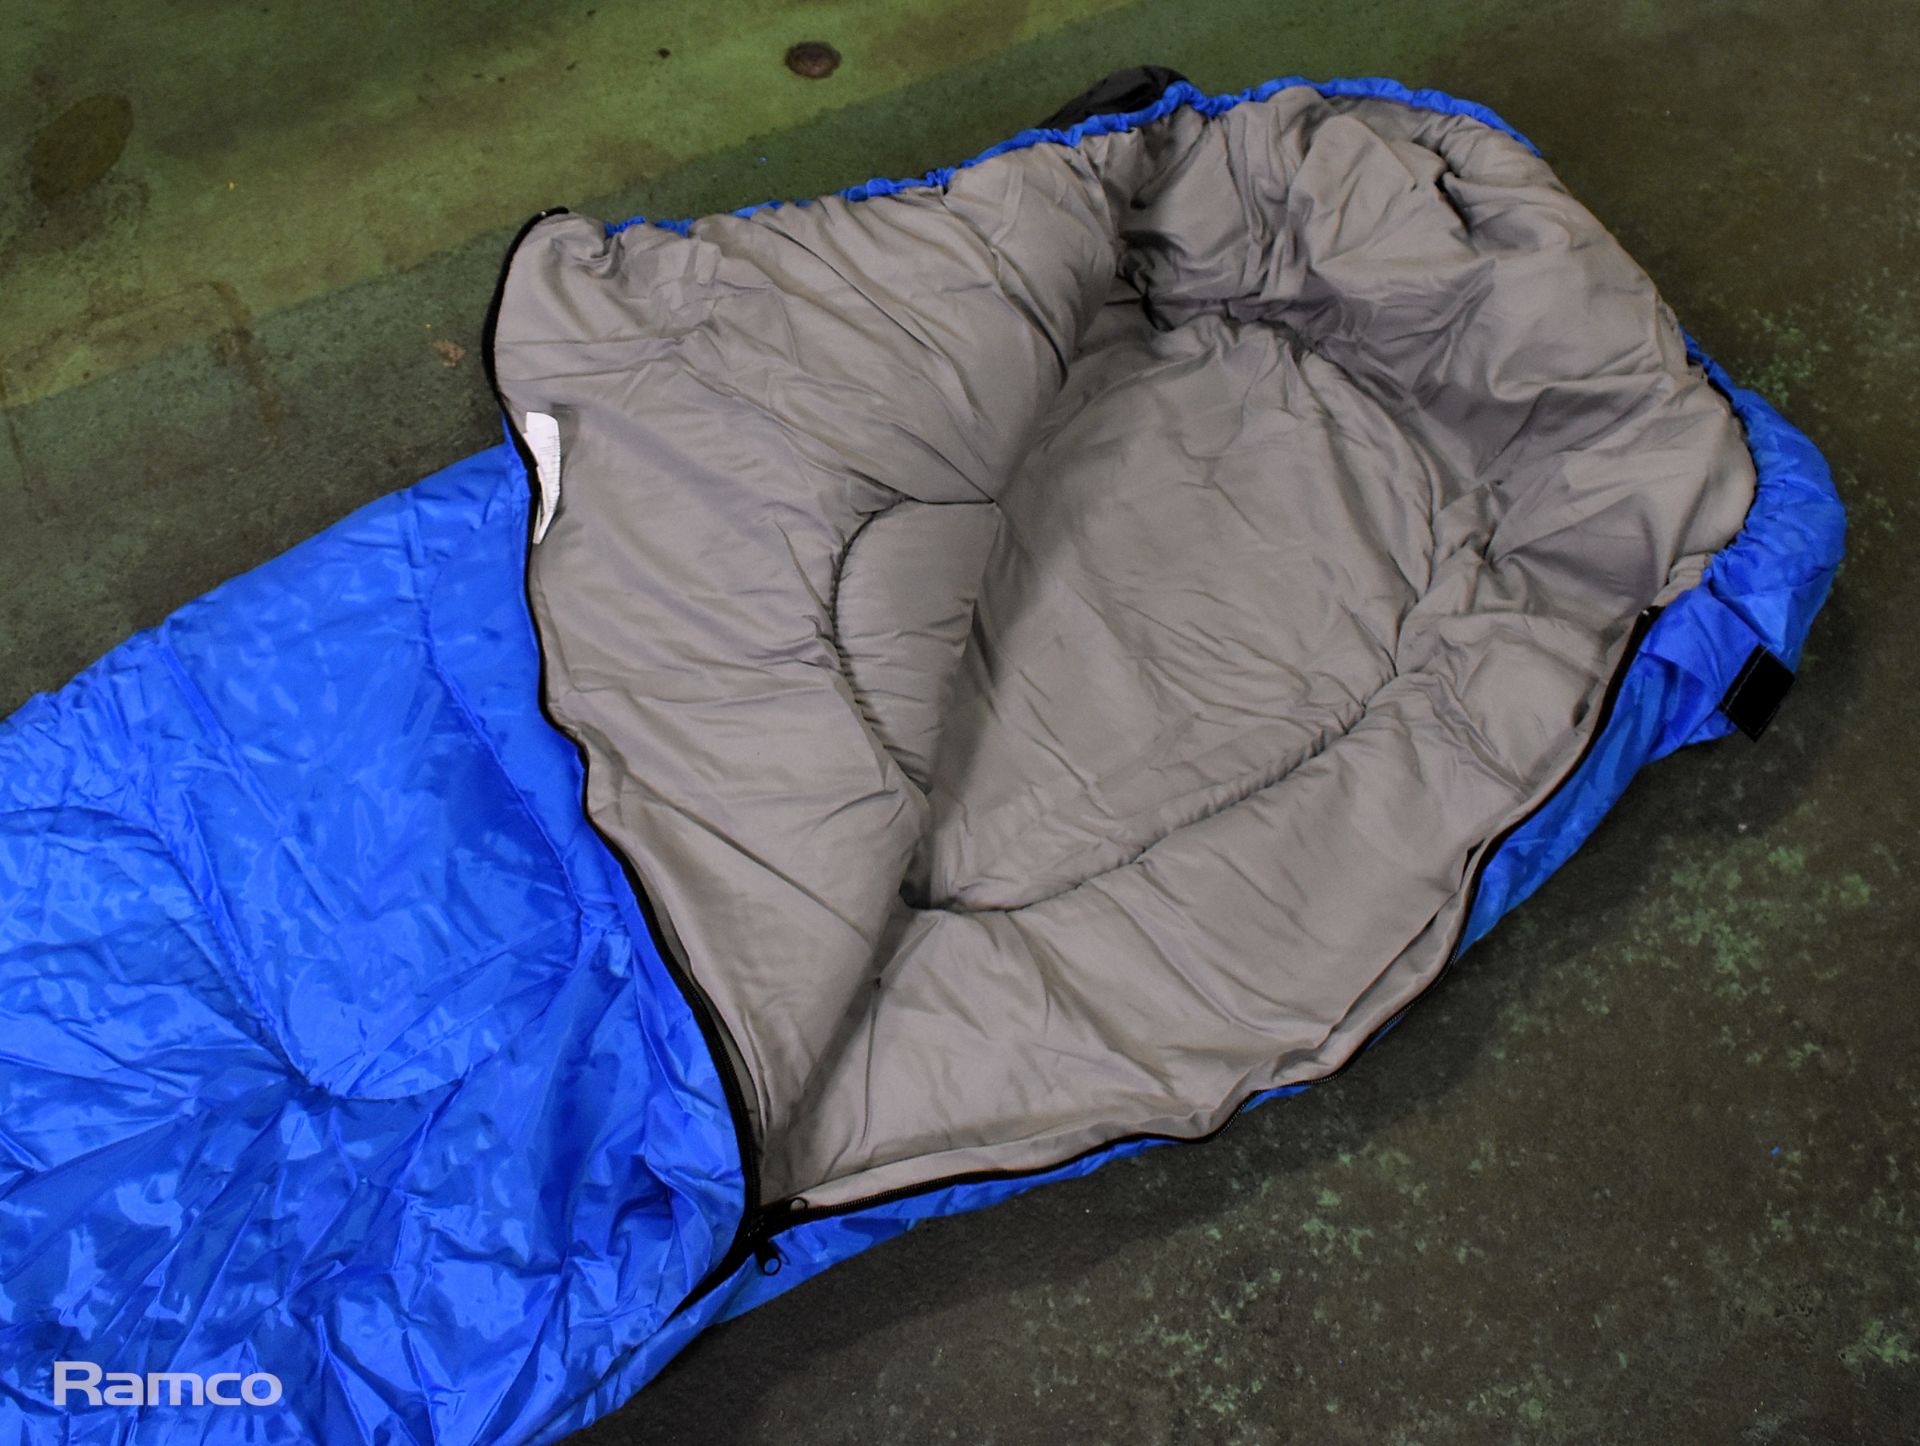 Overnight adventure outdoor sleeping bag in a rucksack - Image 5 of 6